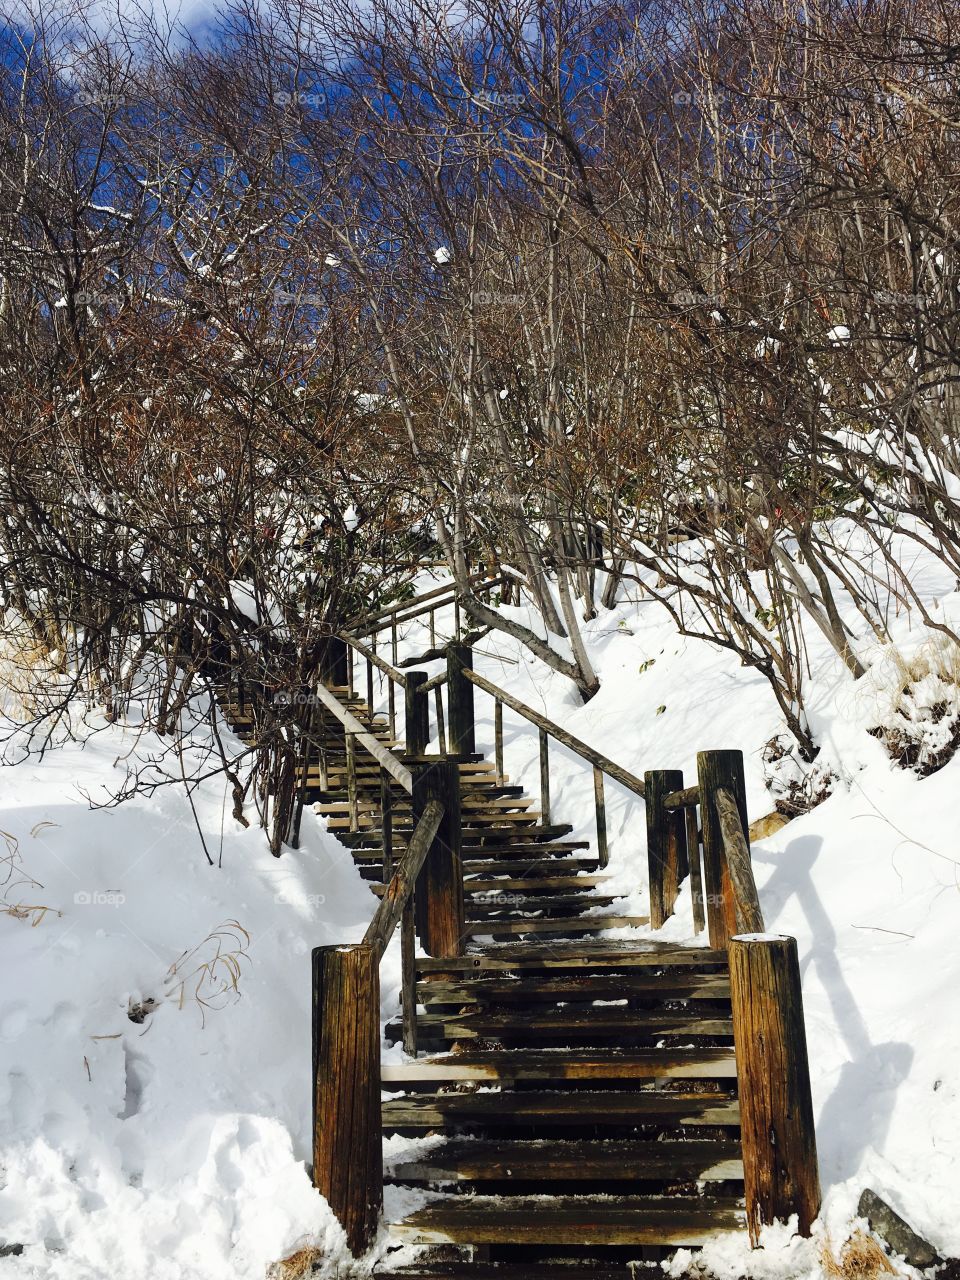 Snow mountains and wooden stair at noboribetsu, hokkaido, japan